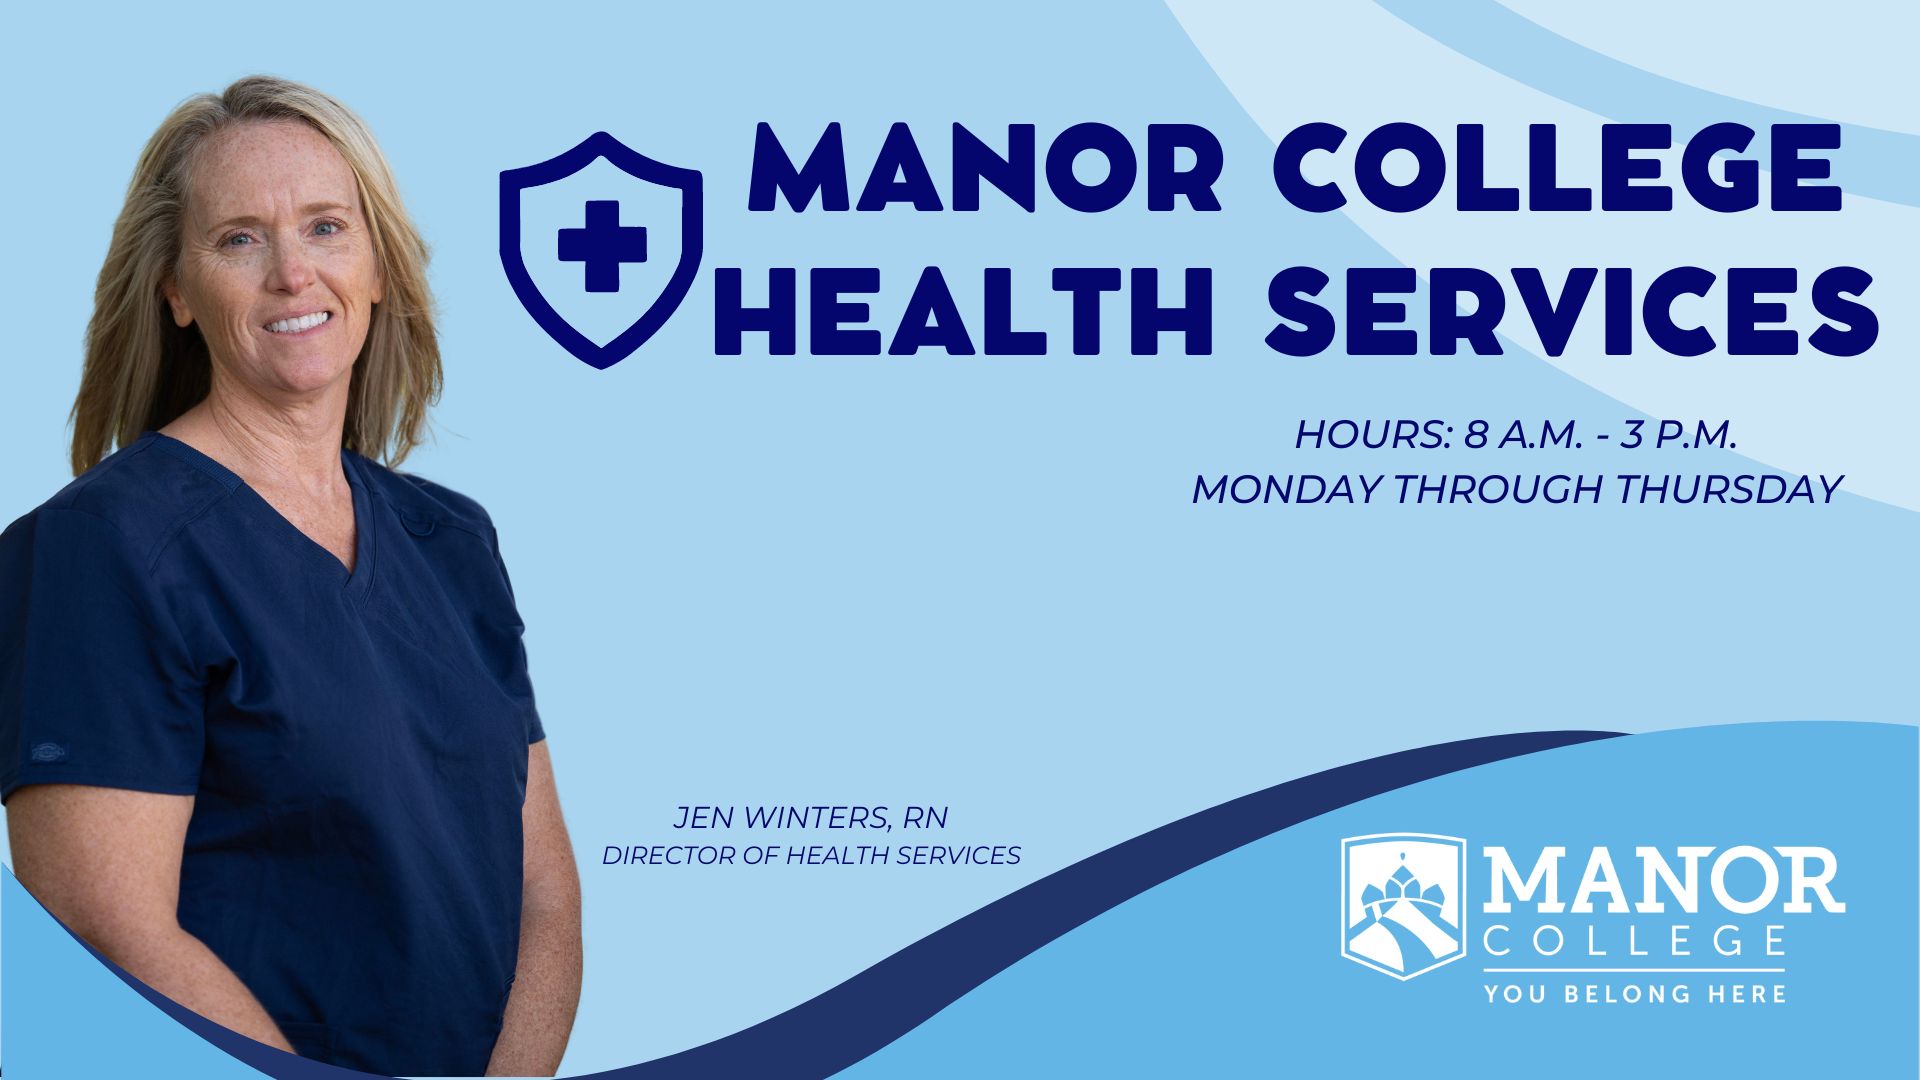 Manor College Health Services